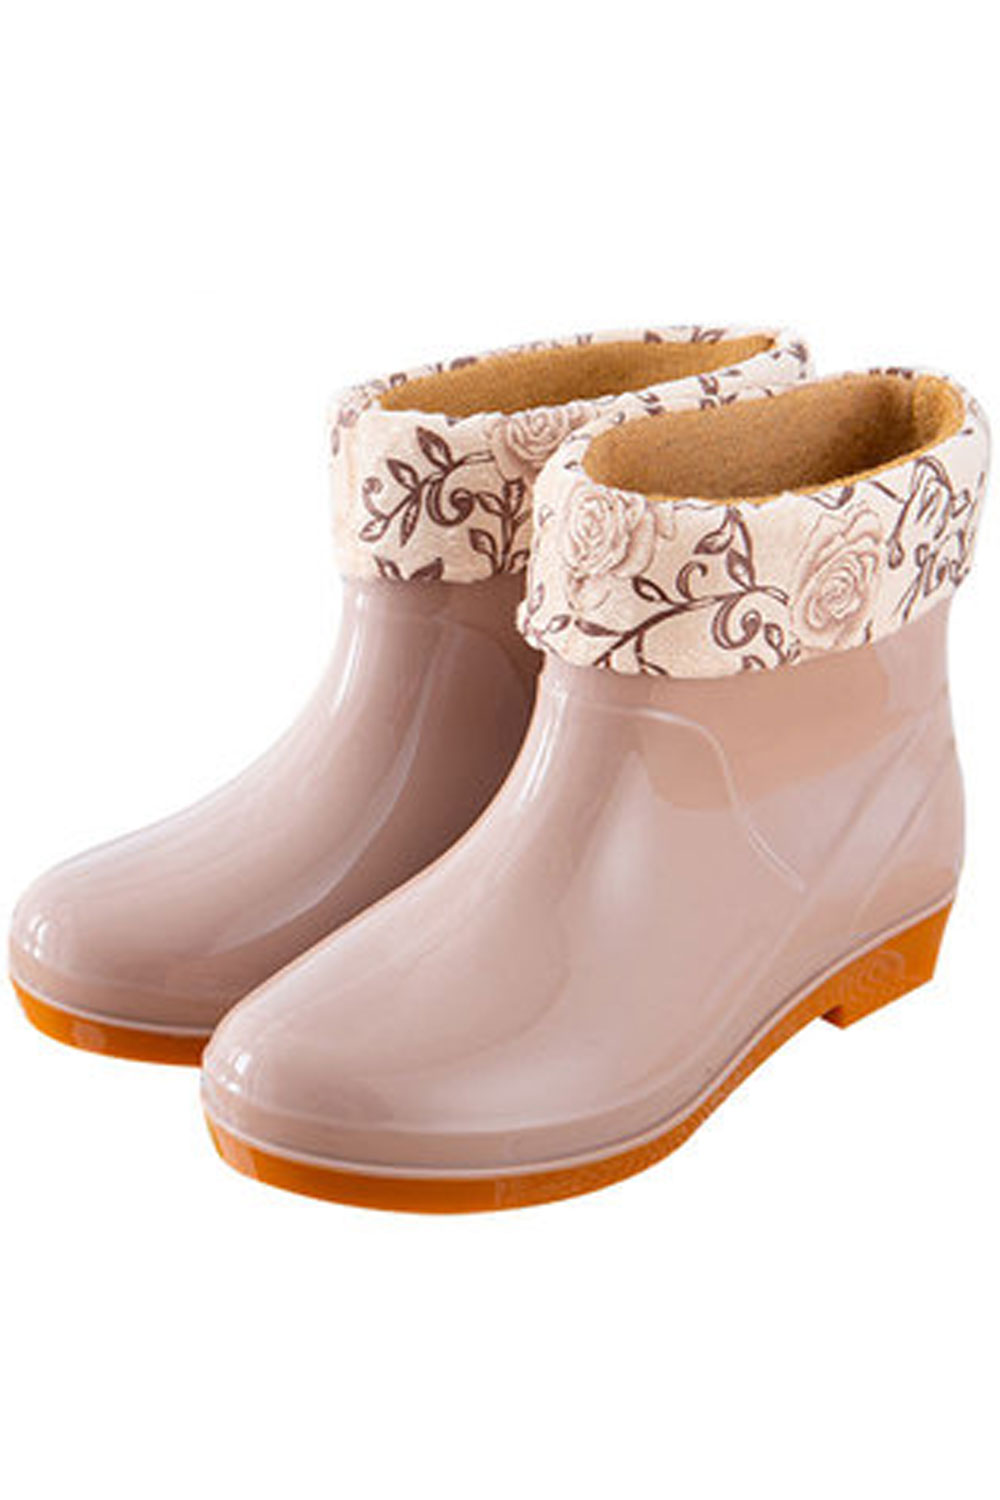 Unomatch Women Weather Protection Rain Boots